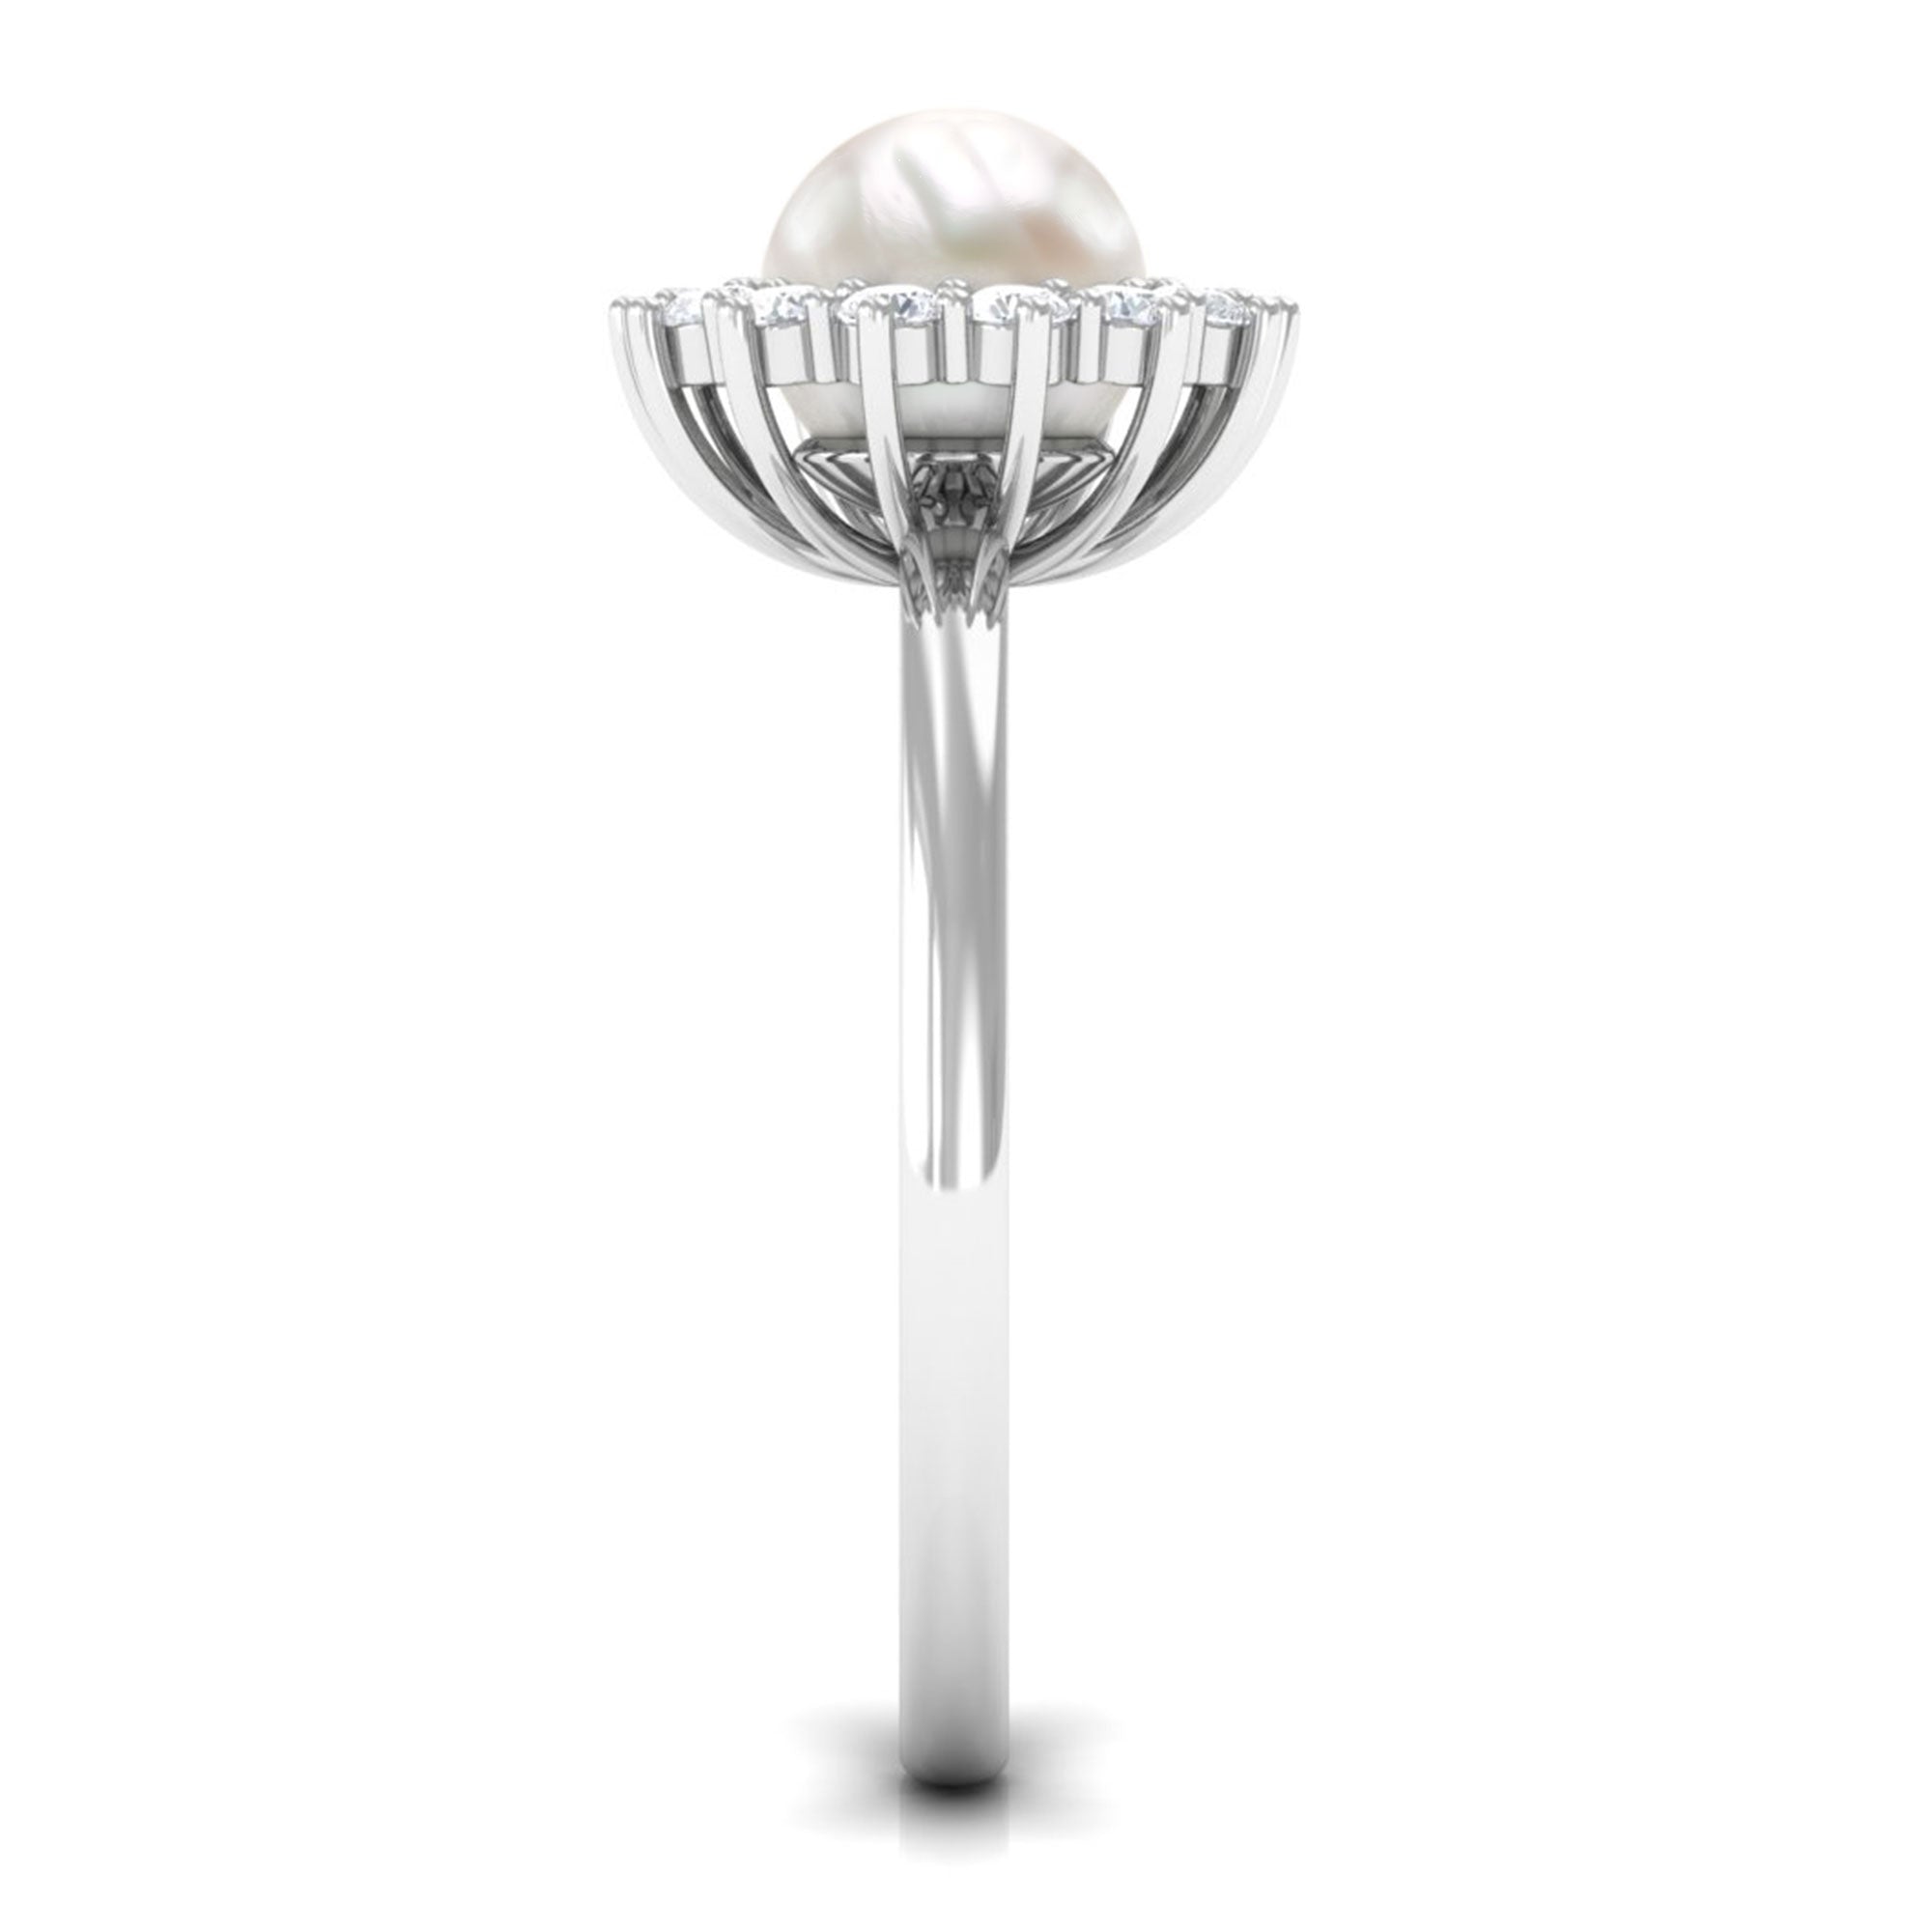 Arisha Jewels-Classic White Pearl Engagement Ring with Diamond Halo